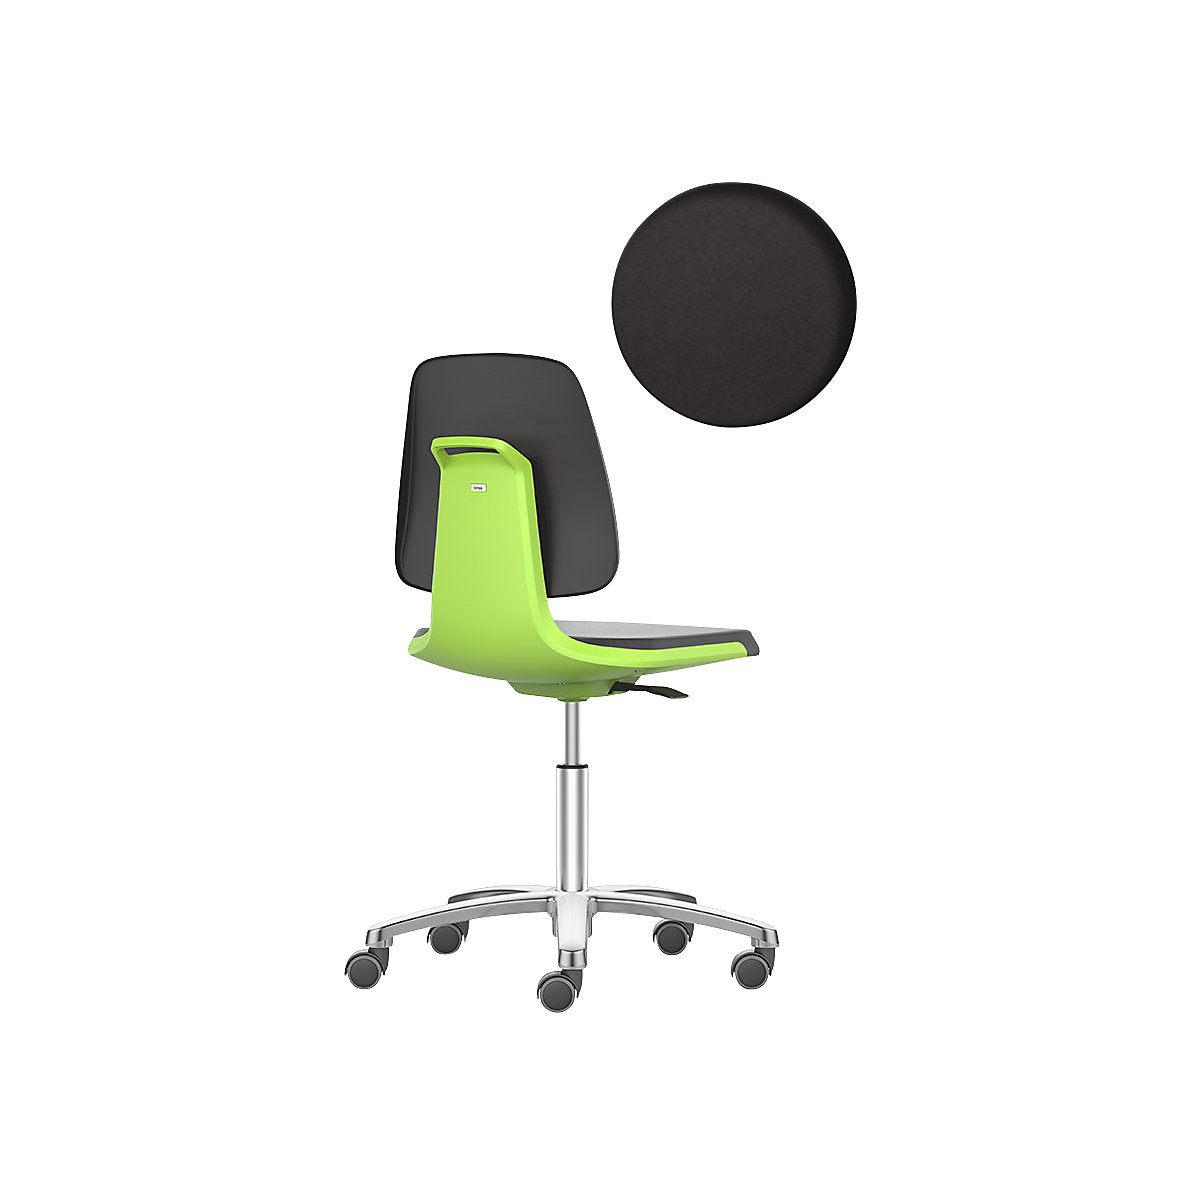 LABSIT industrial swivel chair – bimos, five-star base with castors, PU foam seat, green-21